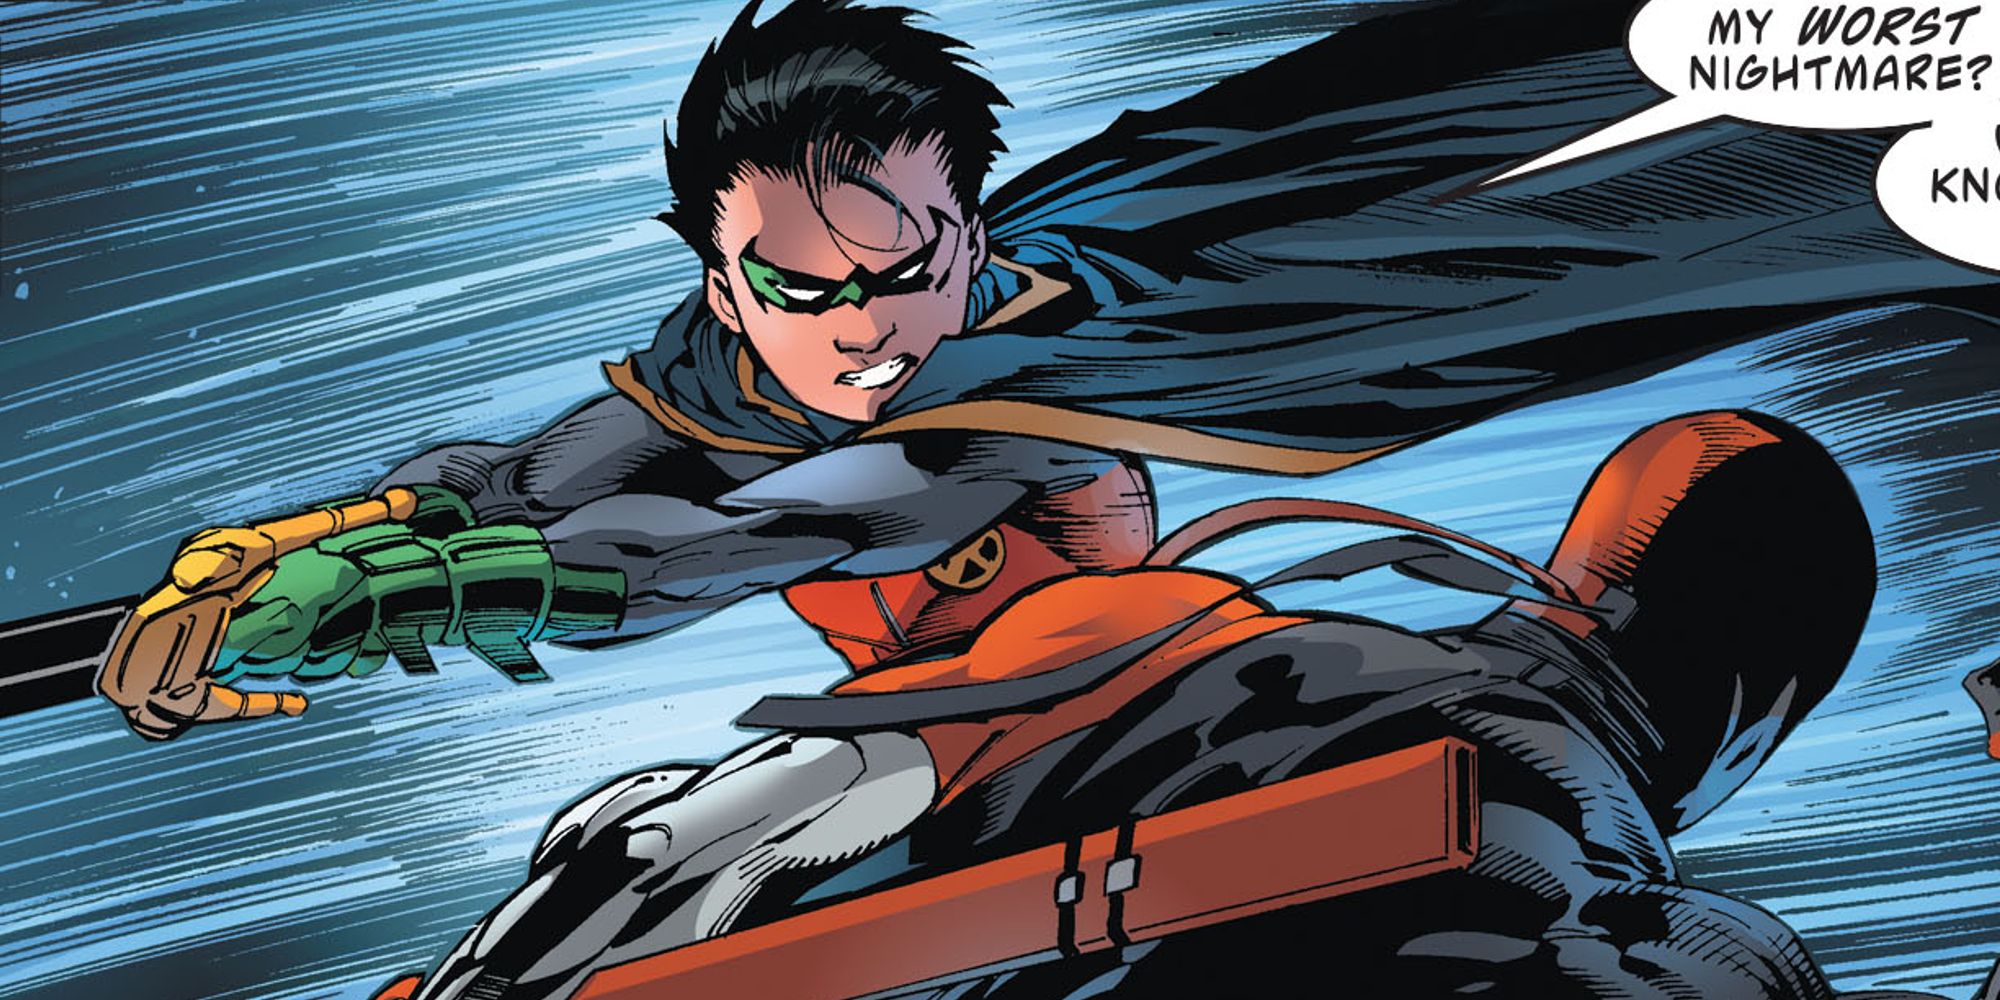 Damian Wayne fighting Deathstroke with a sword